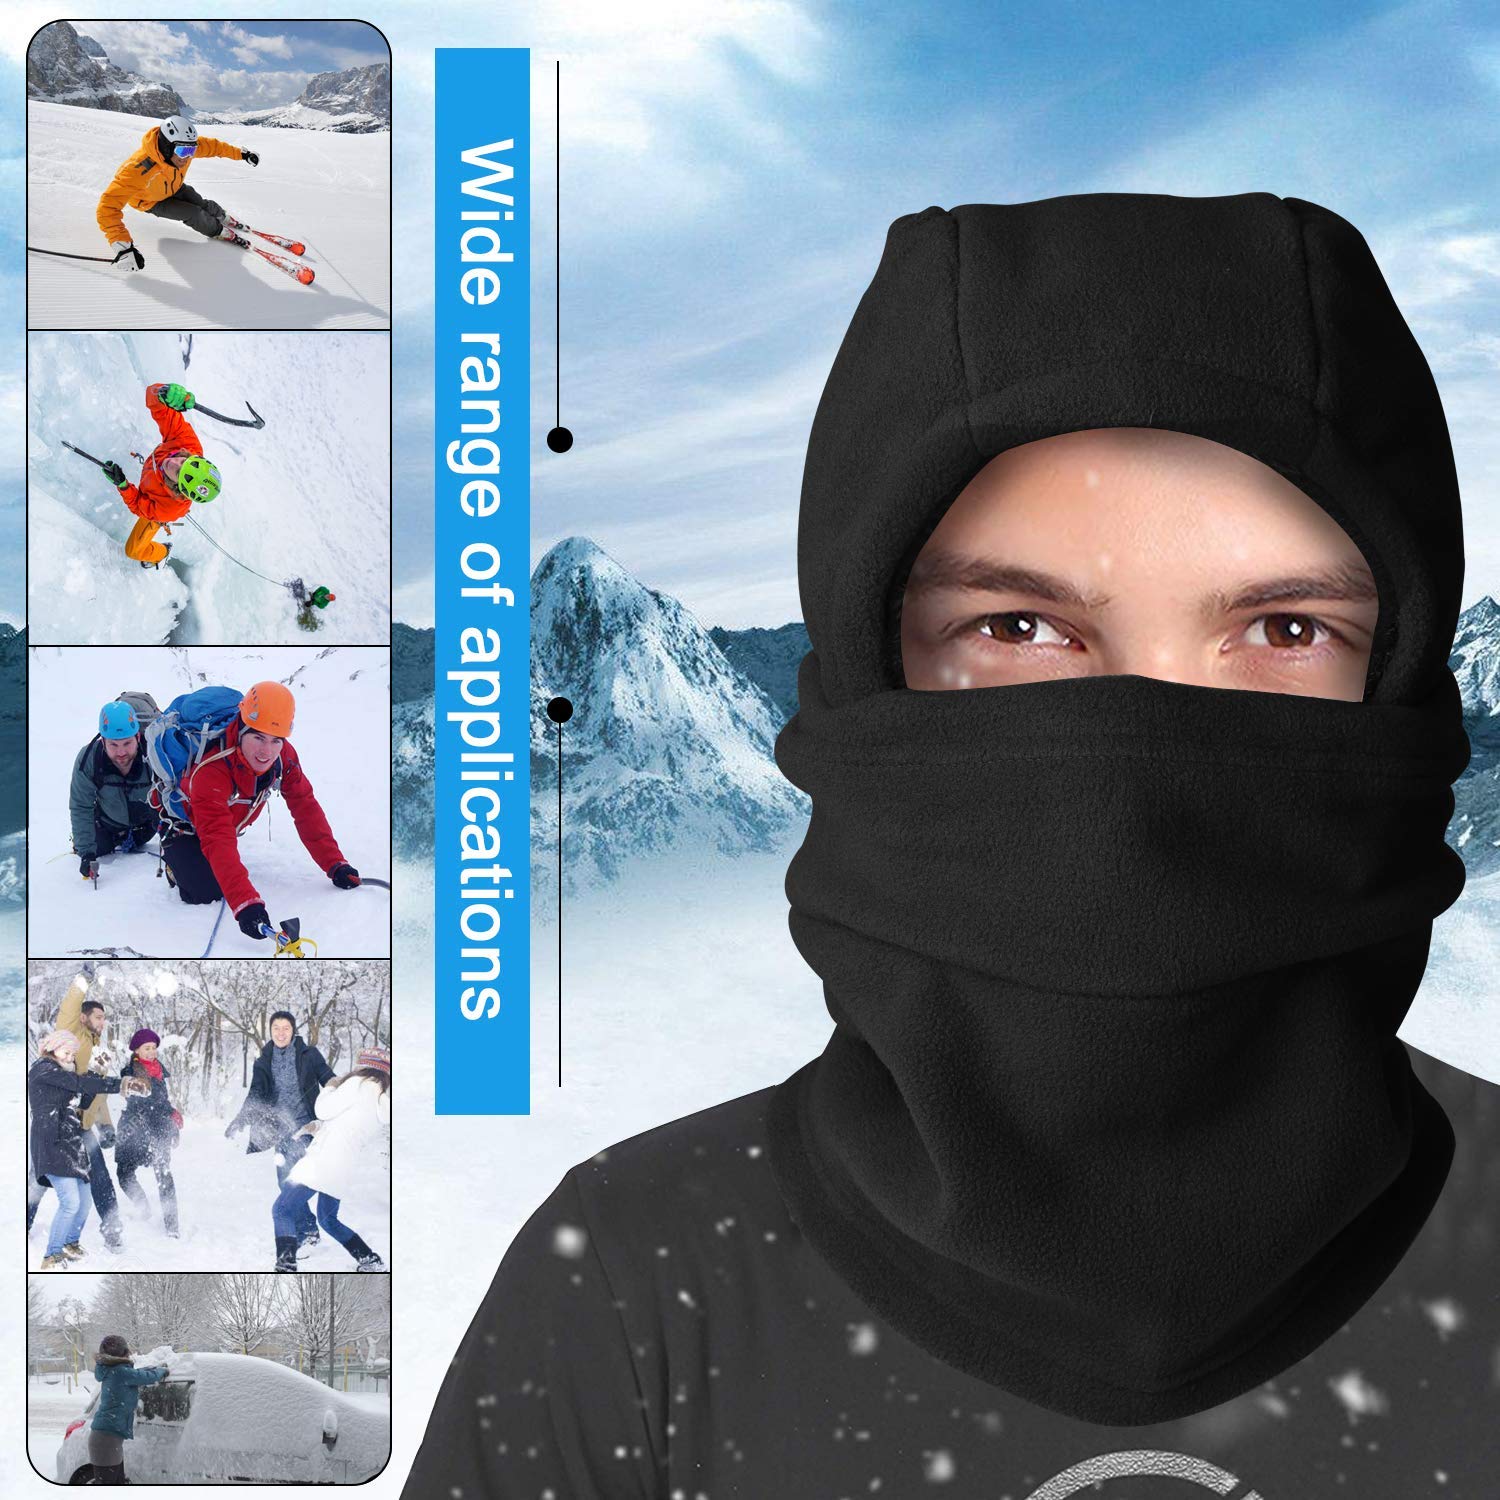 Amazon: Ski Mask $4.99 After Code (Reg. $9.99) - Fabulessly Frugal